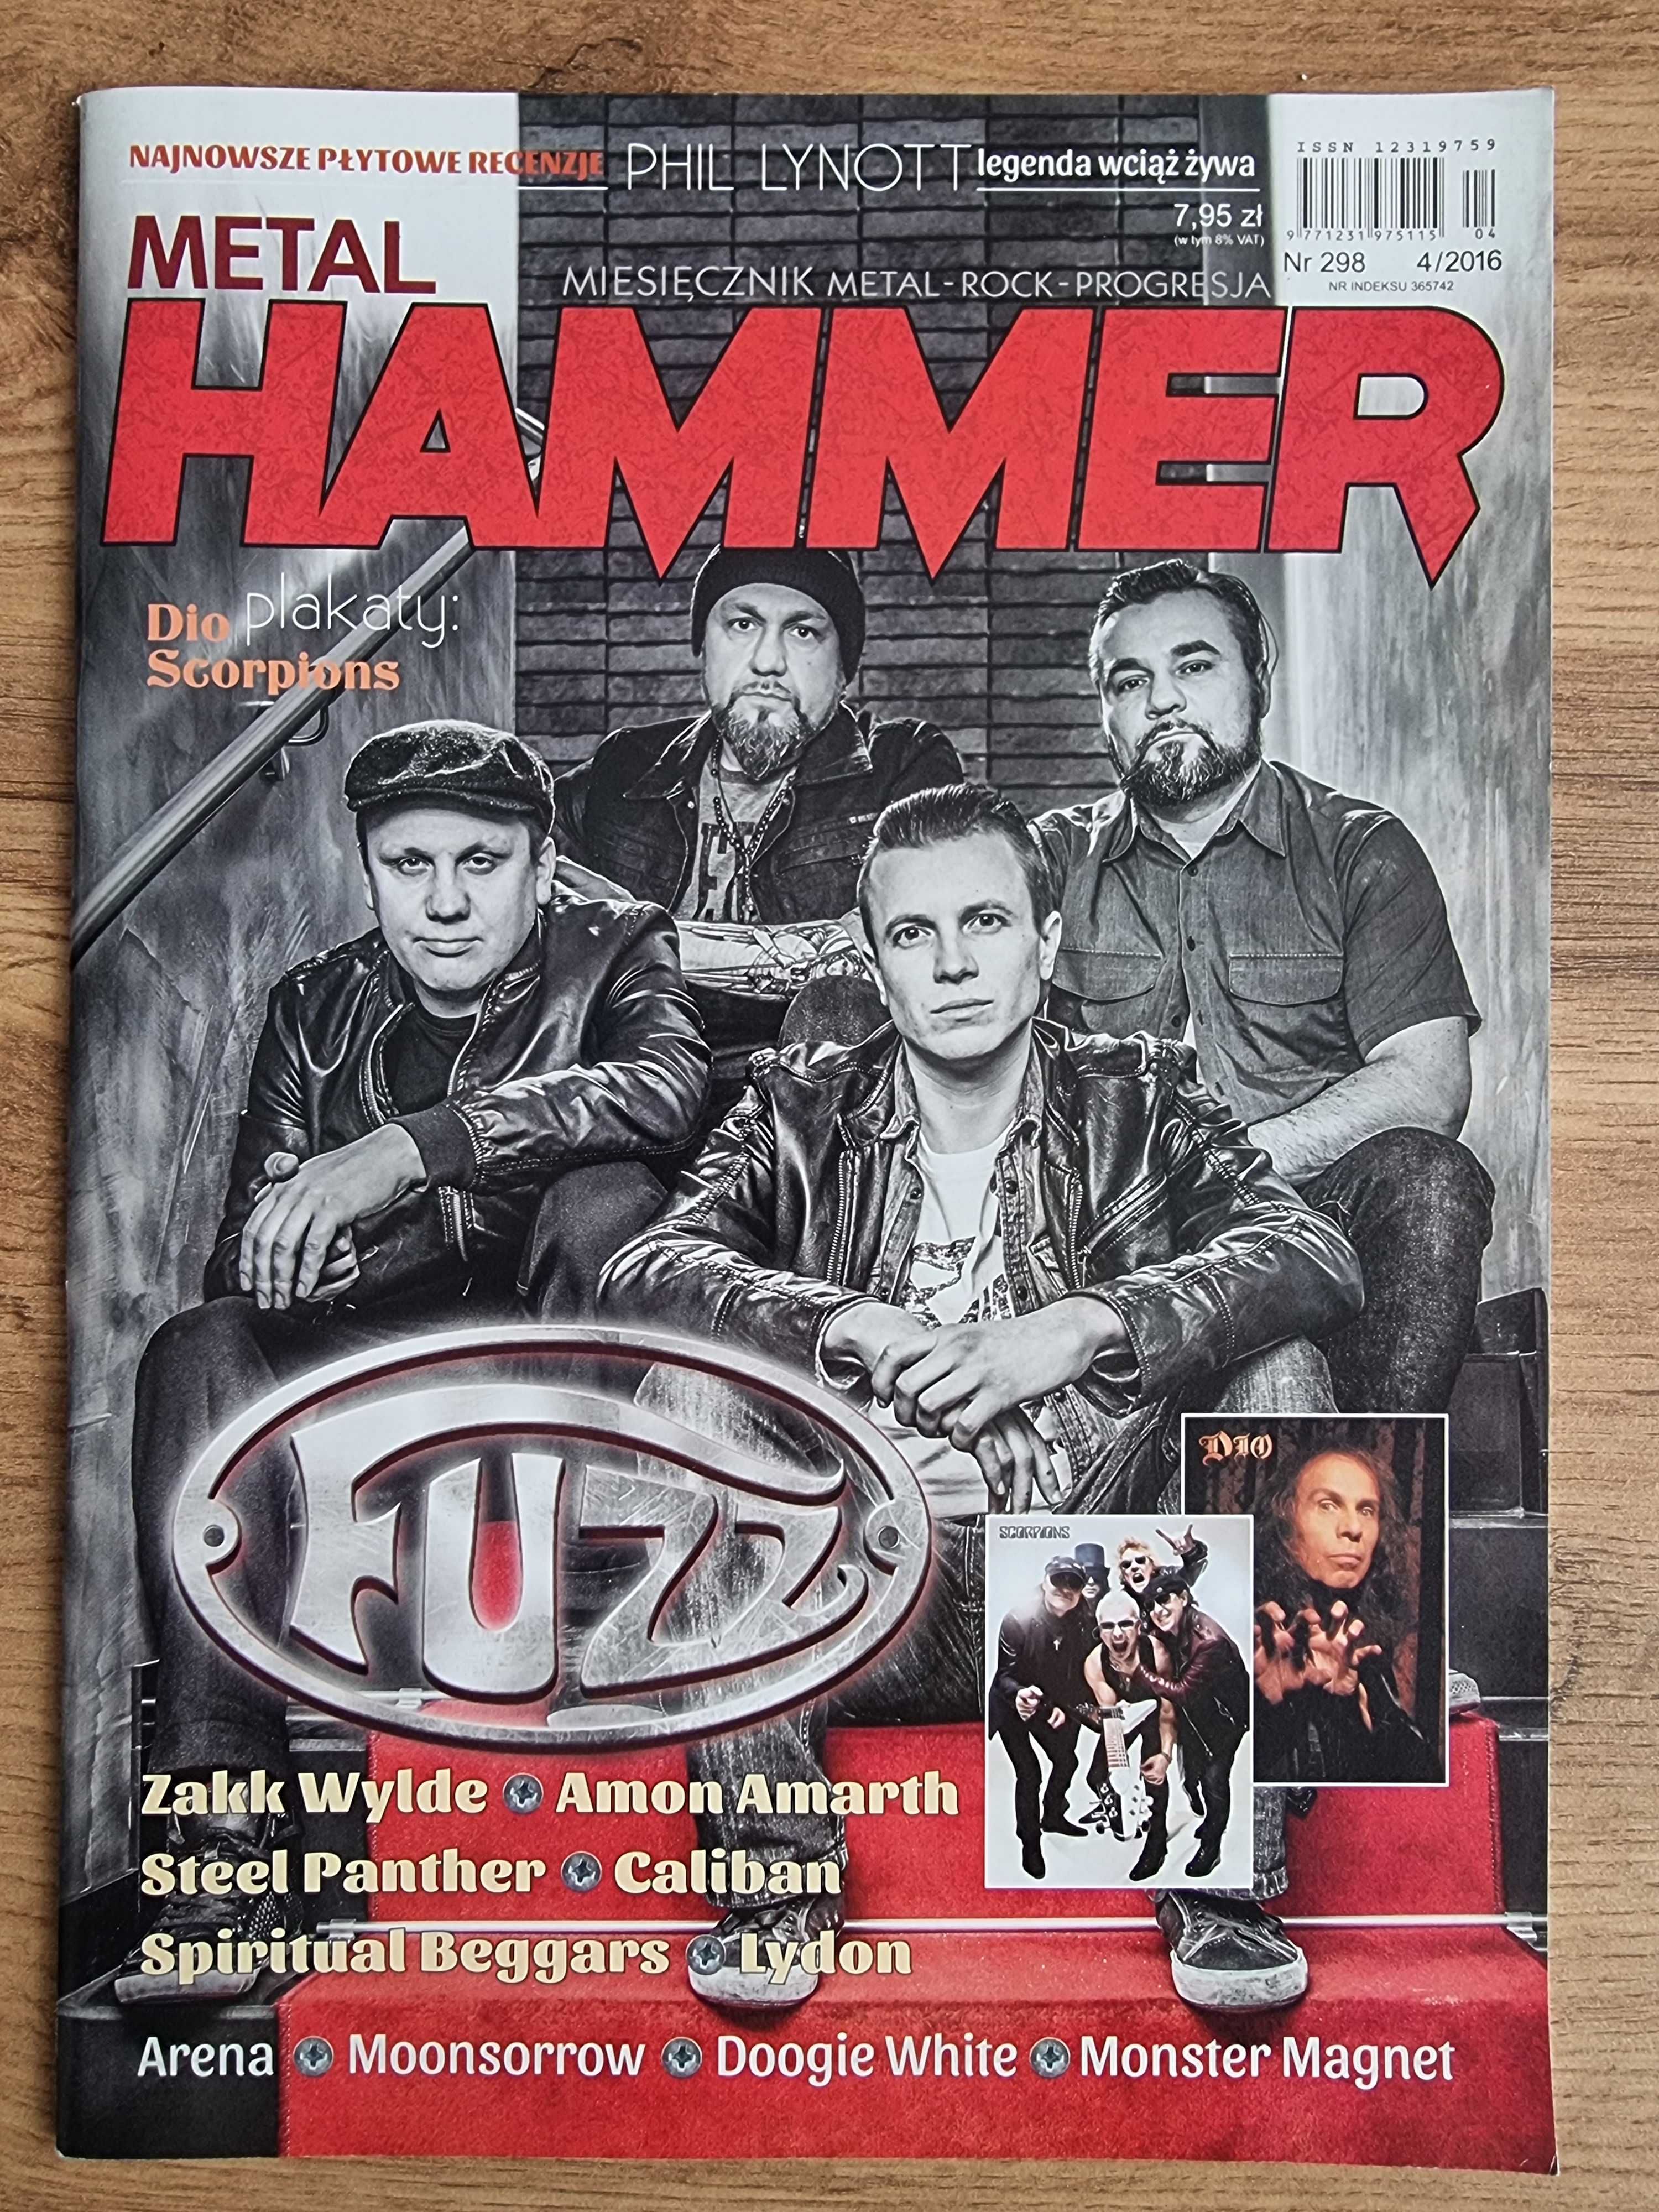 Metal Hammer 2016 - Fuzz, Plakaty: DIO, Scorpions